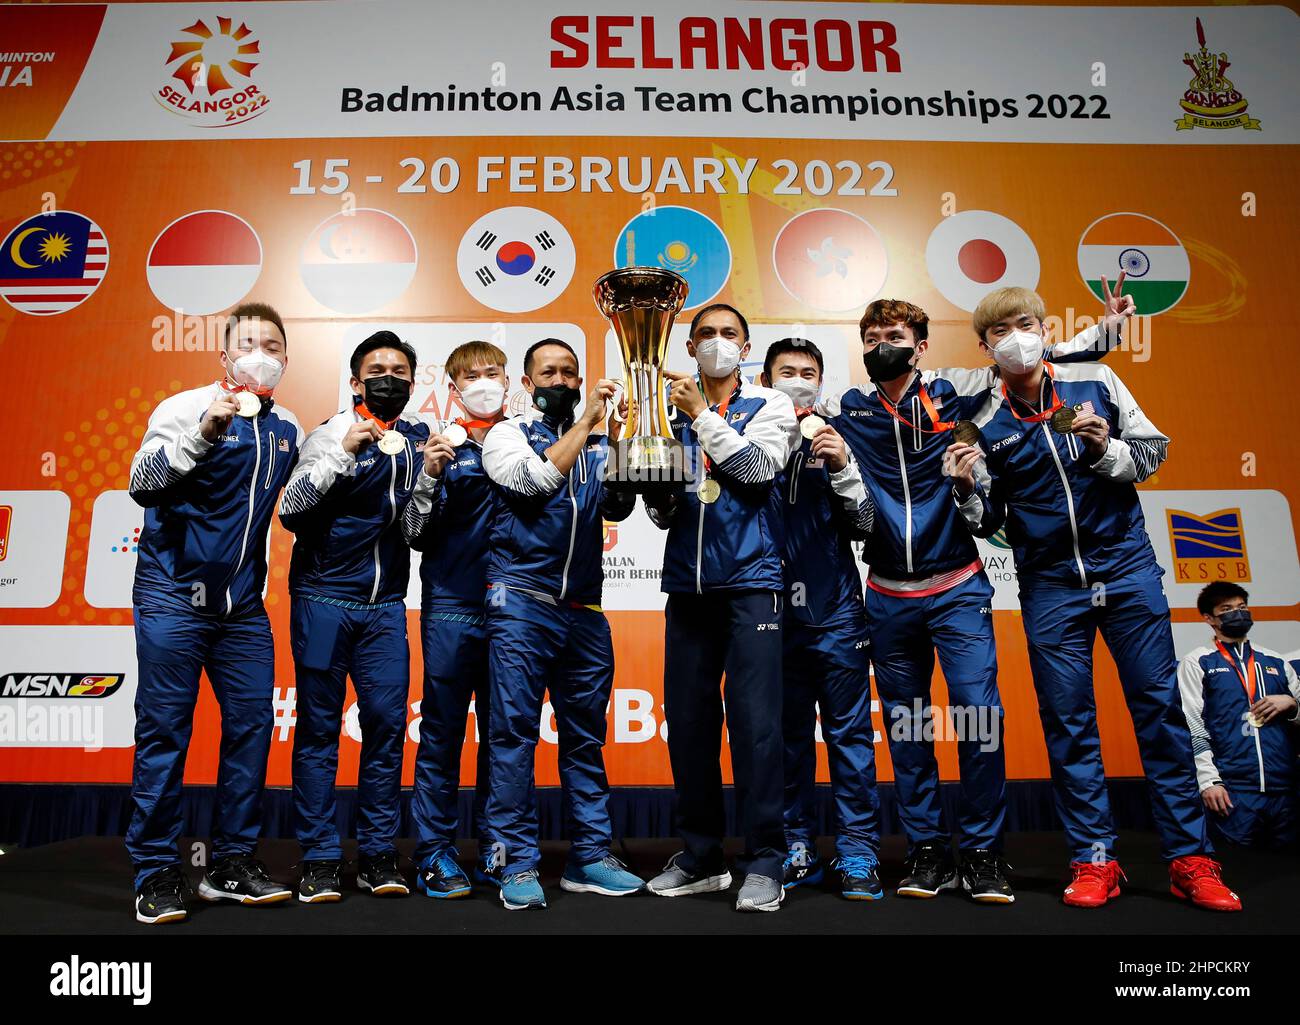 badminton asia team championship 2022 live